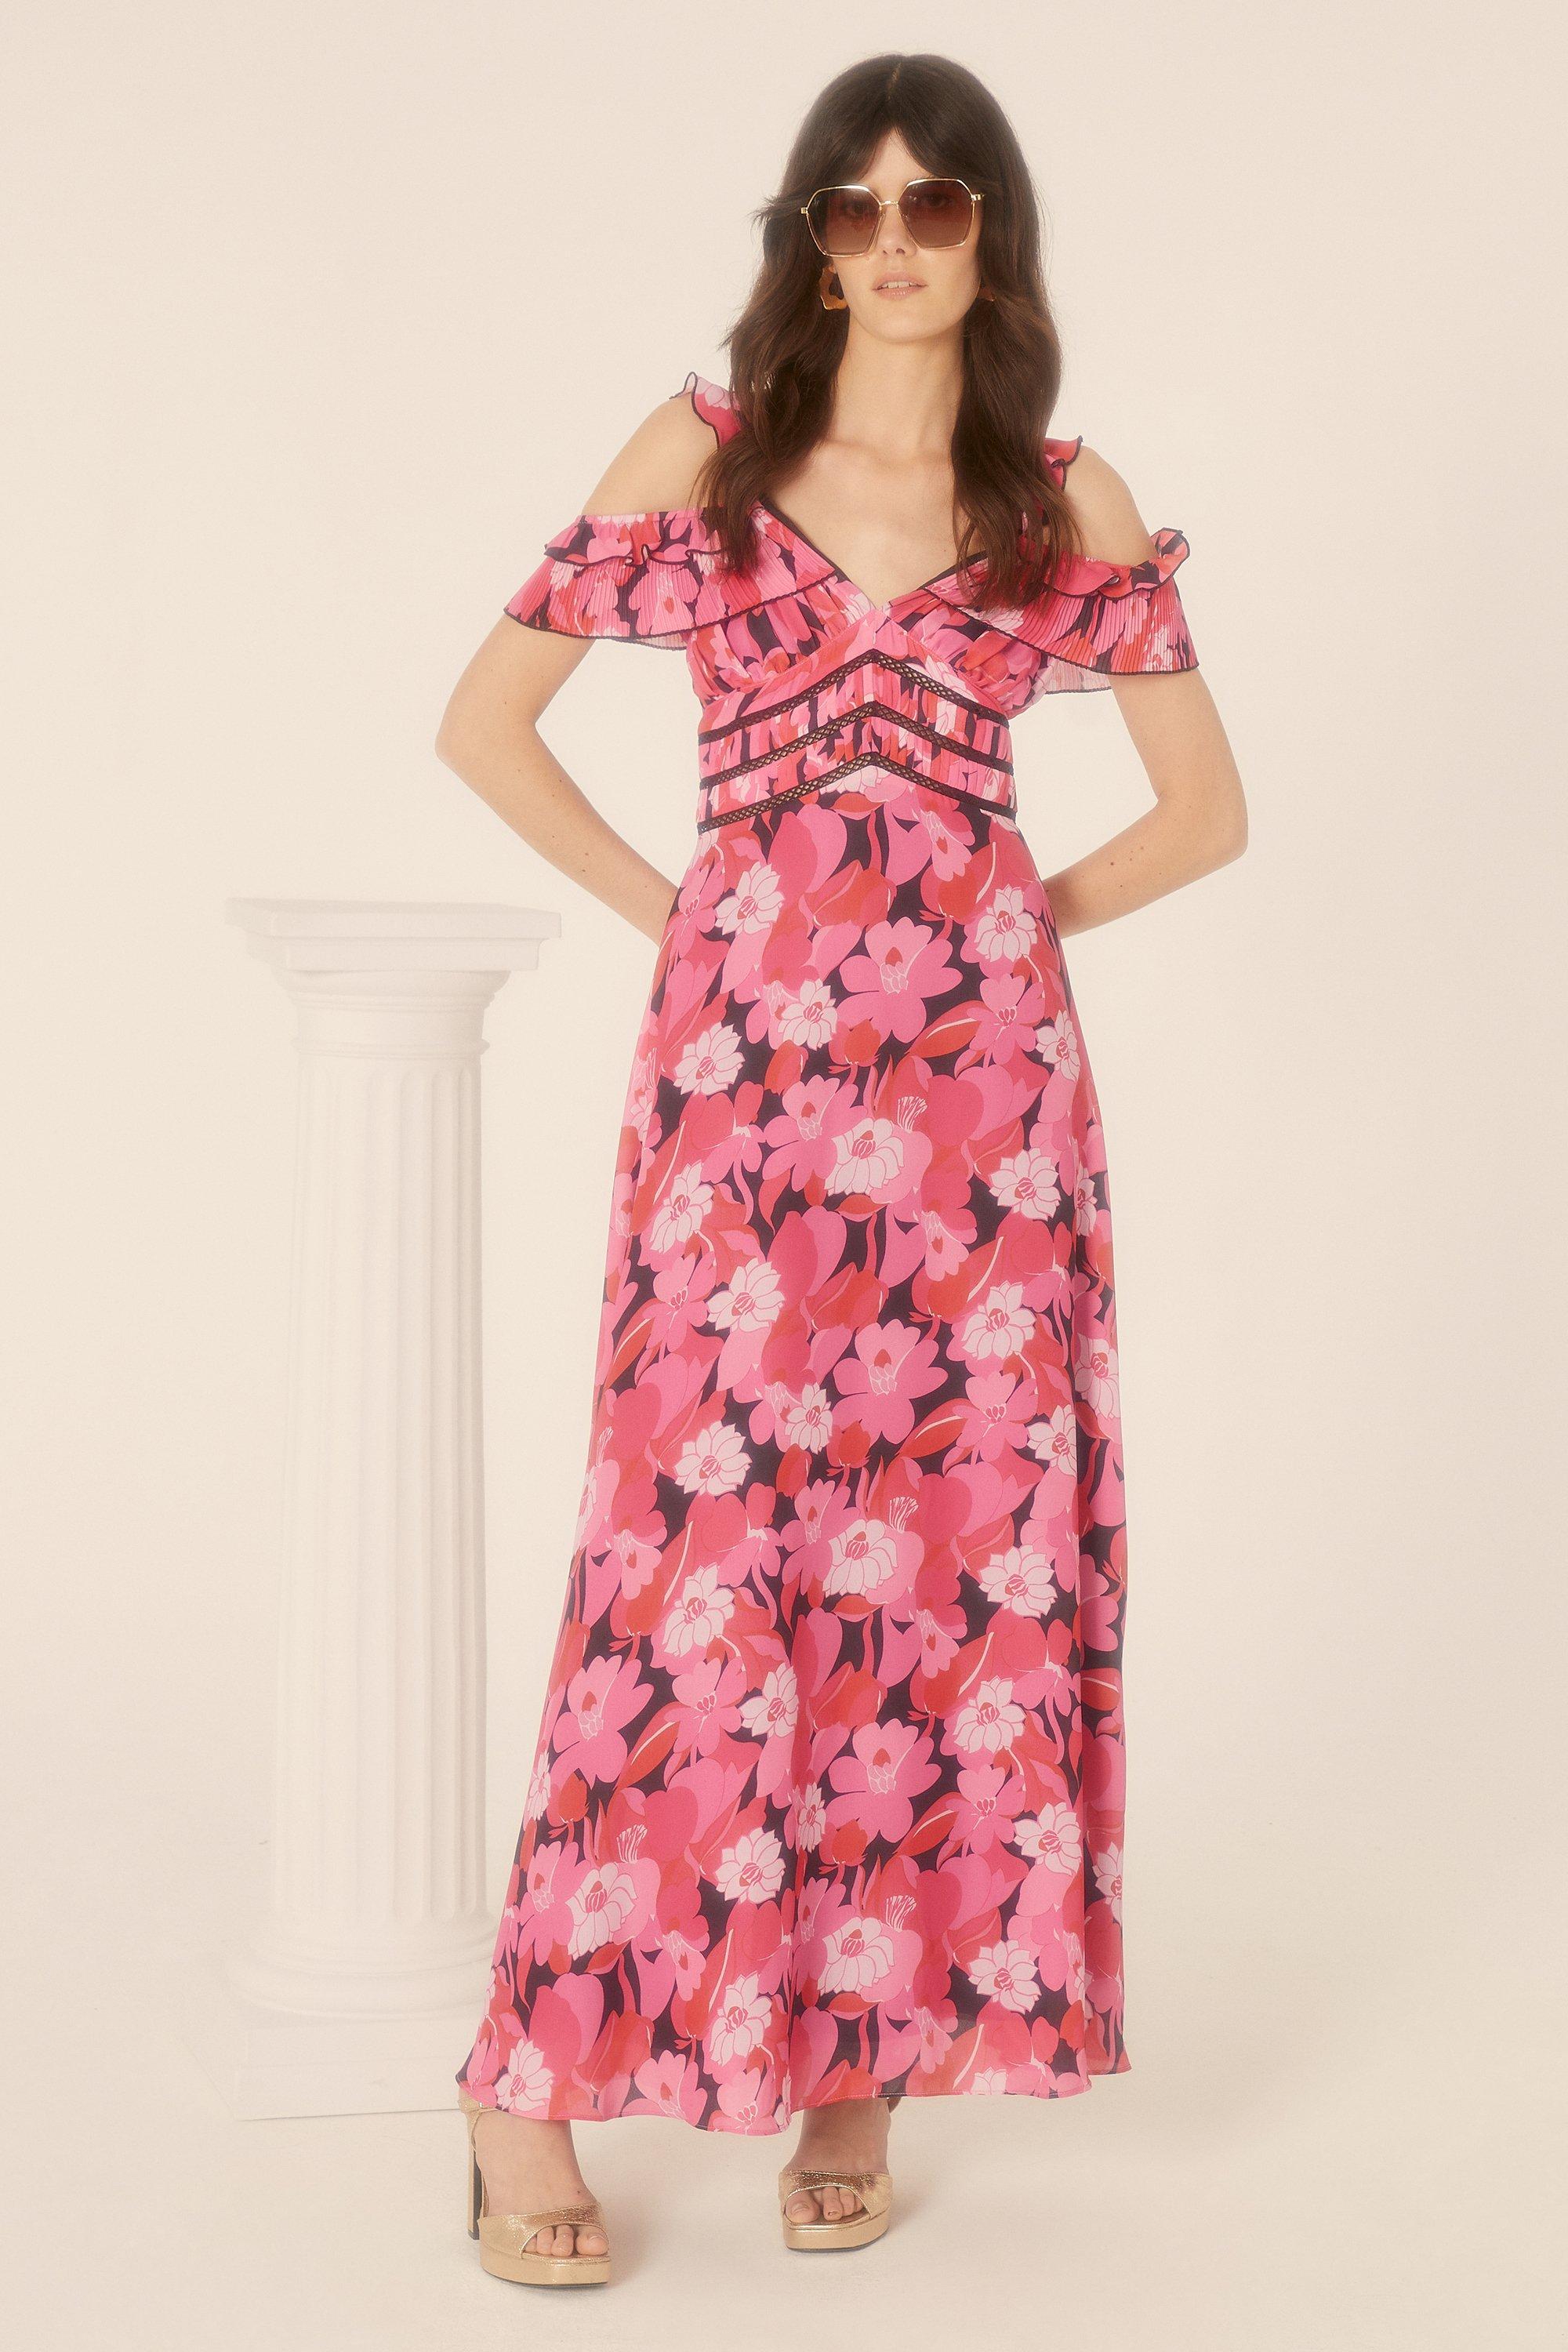 Pop Floral Frill Lace Trim Midaxi Dress